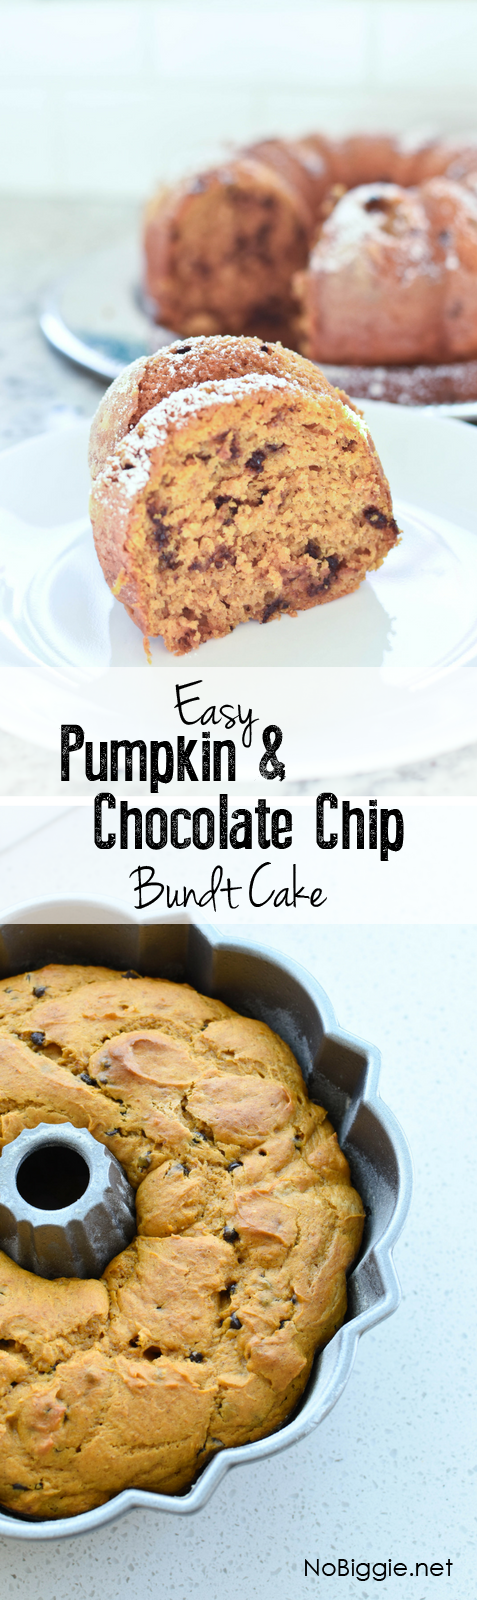 Easy Pumpkin Chocolate Chip Bundt Cake | NoBiggie.net